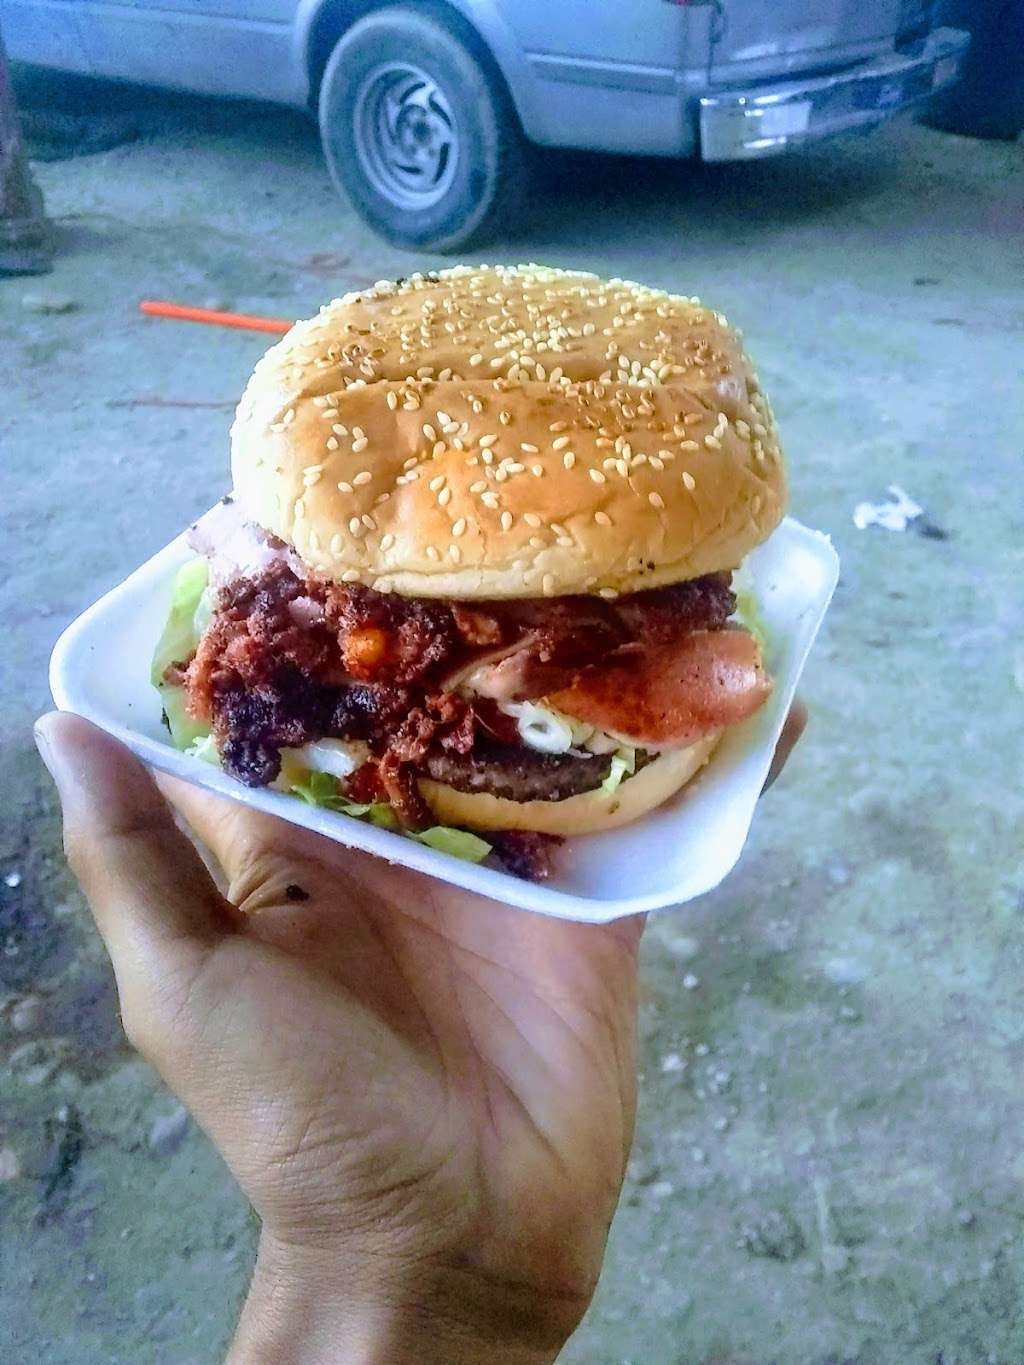 Trolo burger | 22604 Calle josefa ortiz de dominguez 2457 Colonia, Pedregalde Sta Julia, 22604 Tijuana, B.C., Mexico | Phone: 664 432 3939